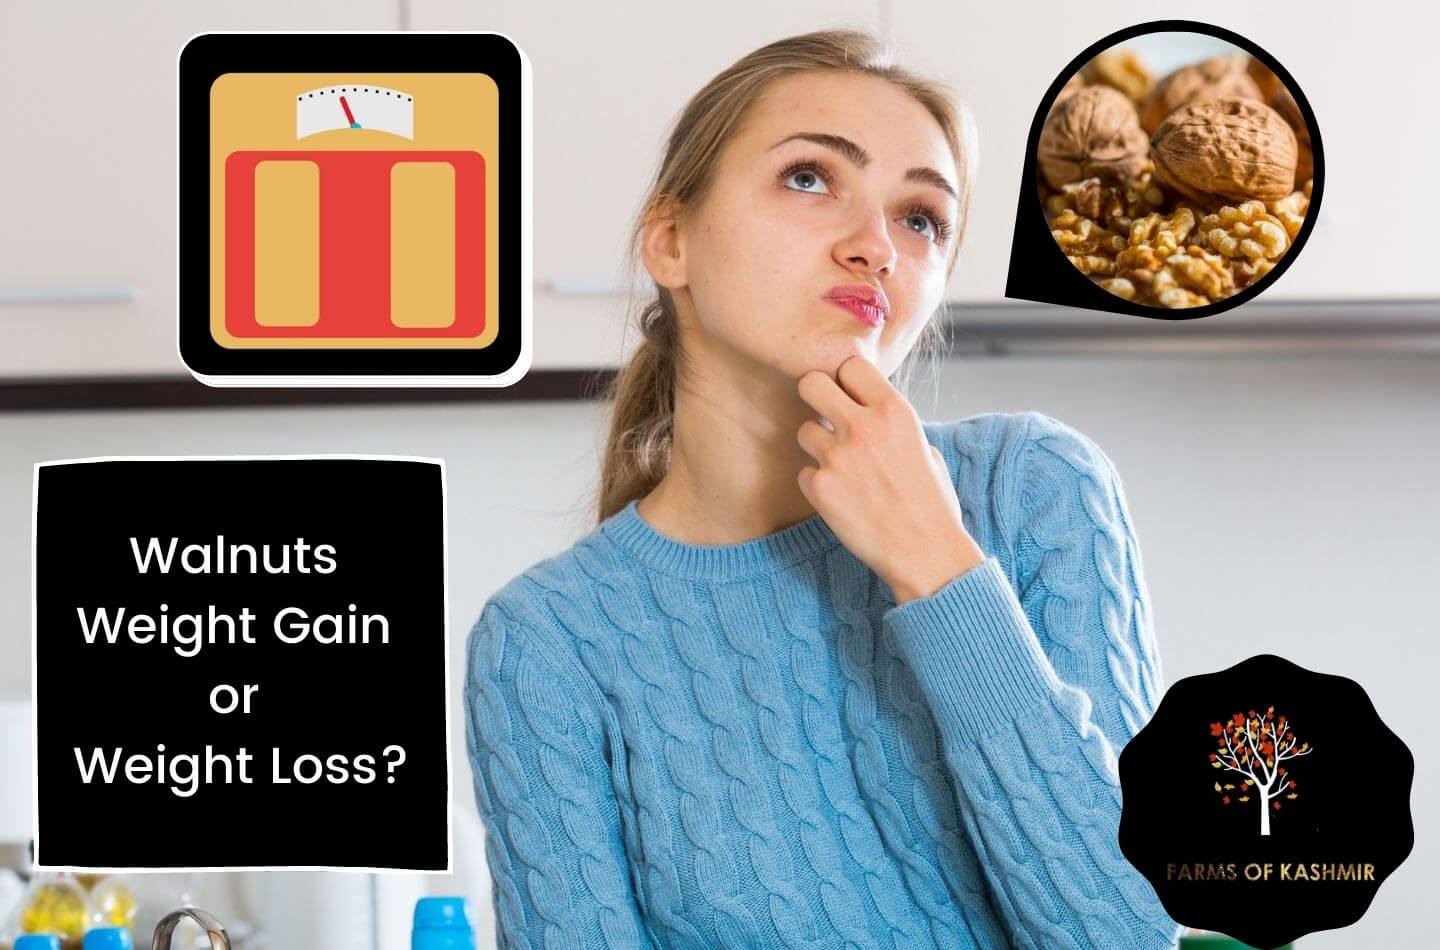 Walnuts Weight Gain or Loss?